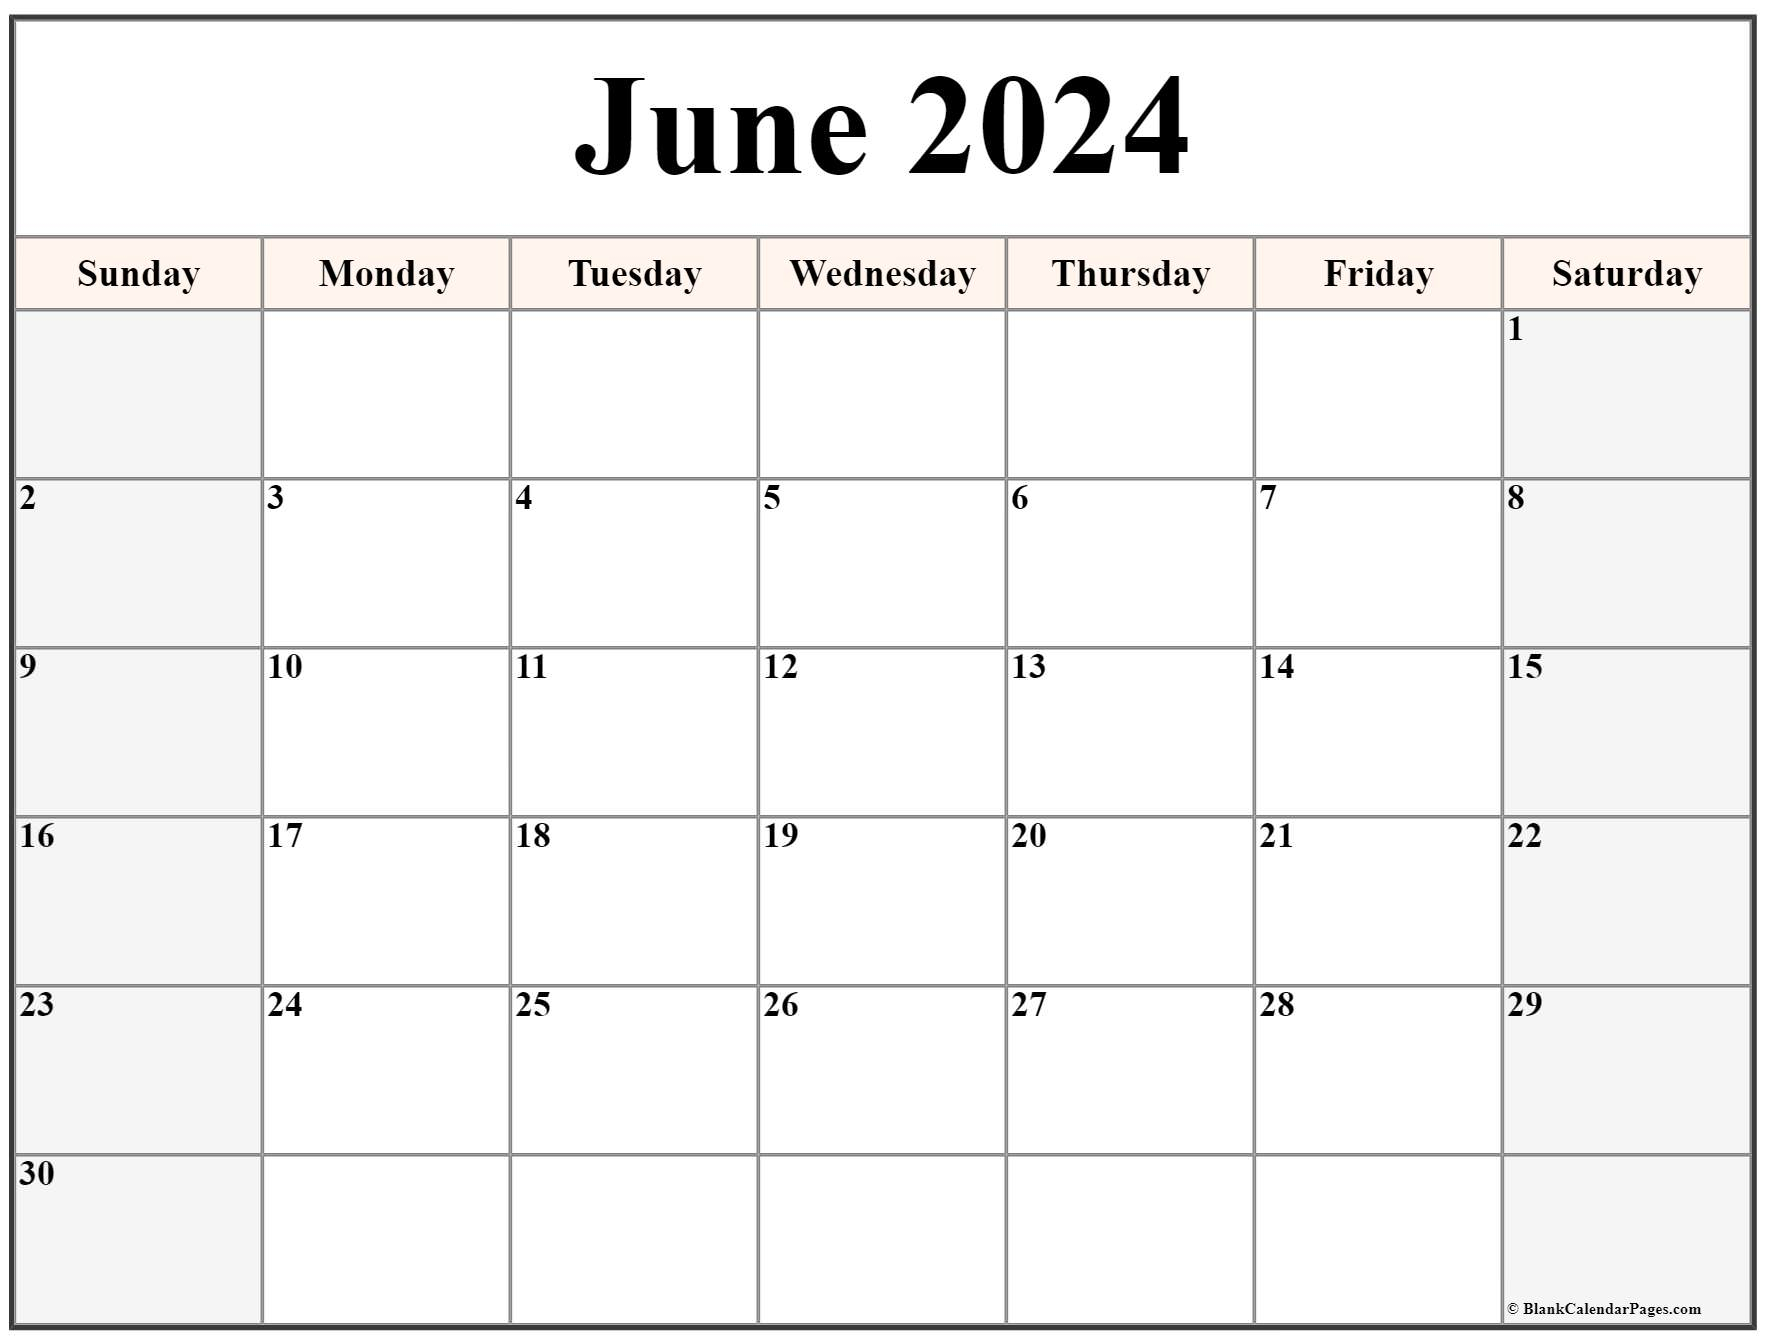 June 2024 Calendar | Free Printable Calendar for Printable 2024 June Calendar